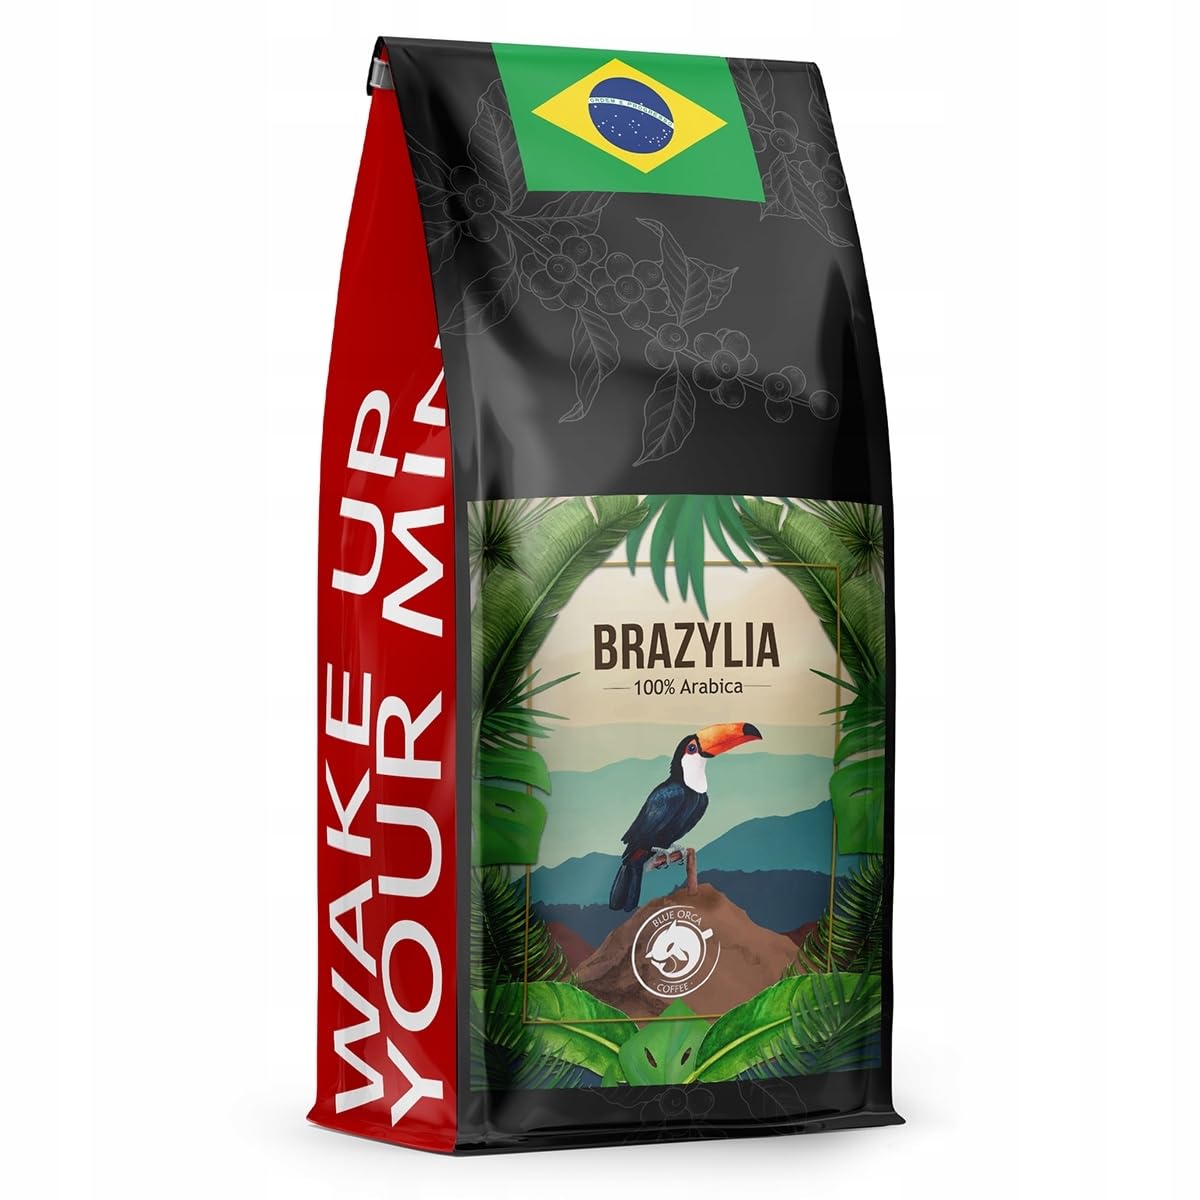 Blue Orca Coffee - BRAZIL SANTOS - Specialty Kaffeebohnen aus Brasilien - Frisch geröstet - Single Origin - SCA 82.5 Punkte, 1 kg
